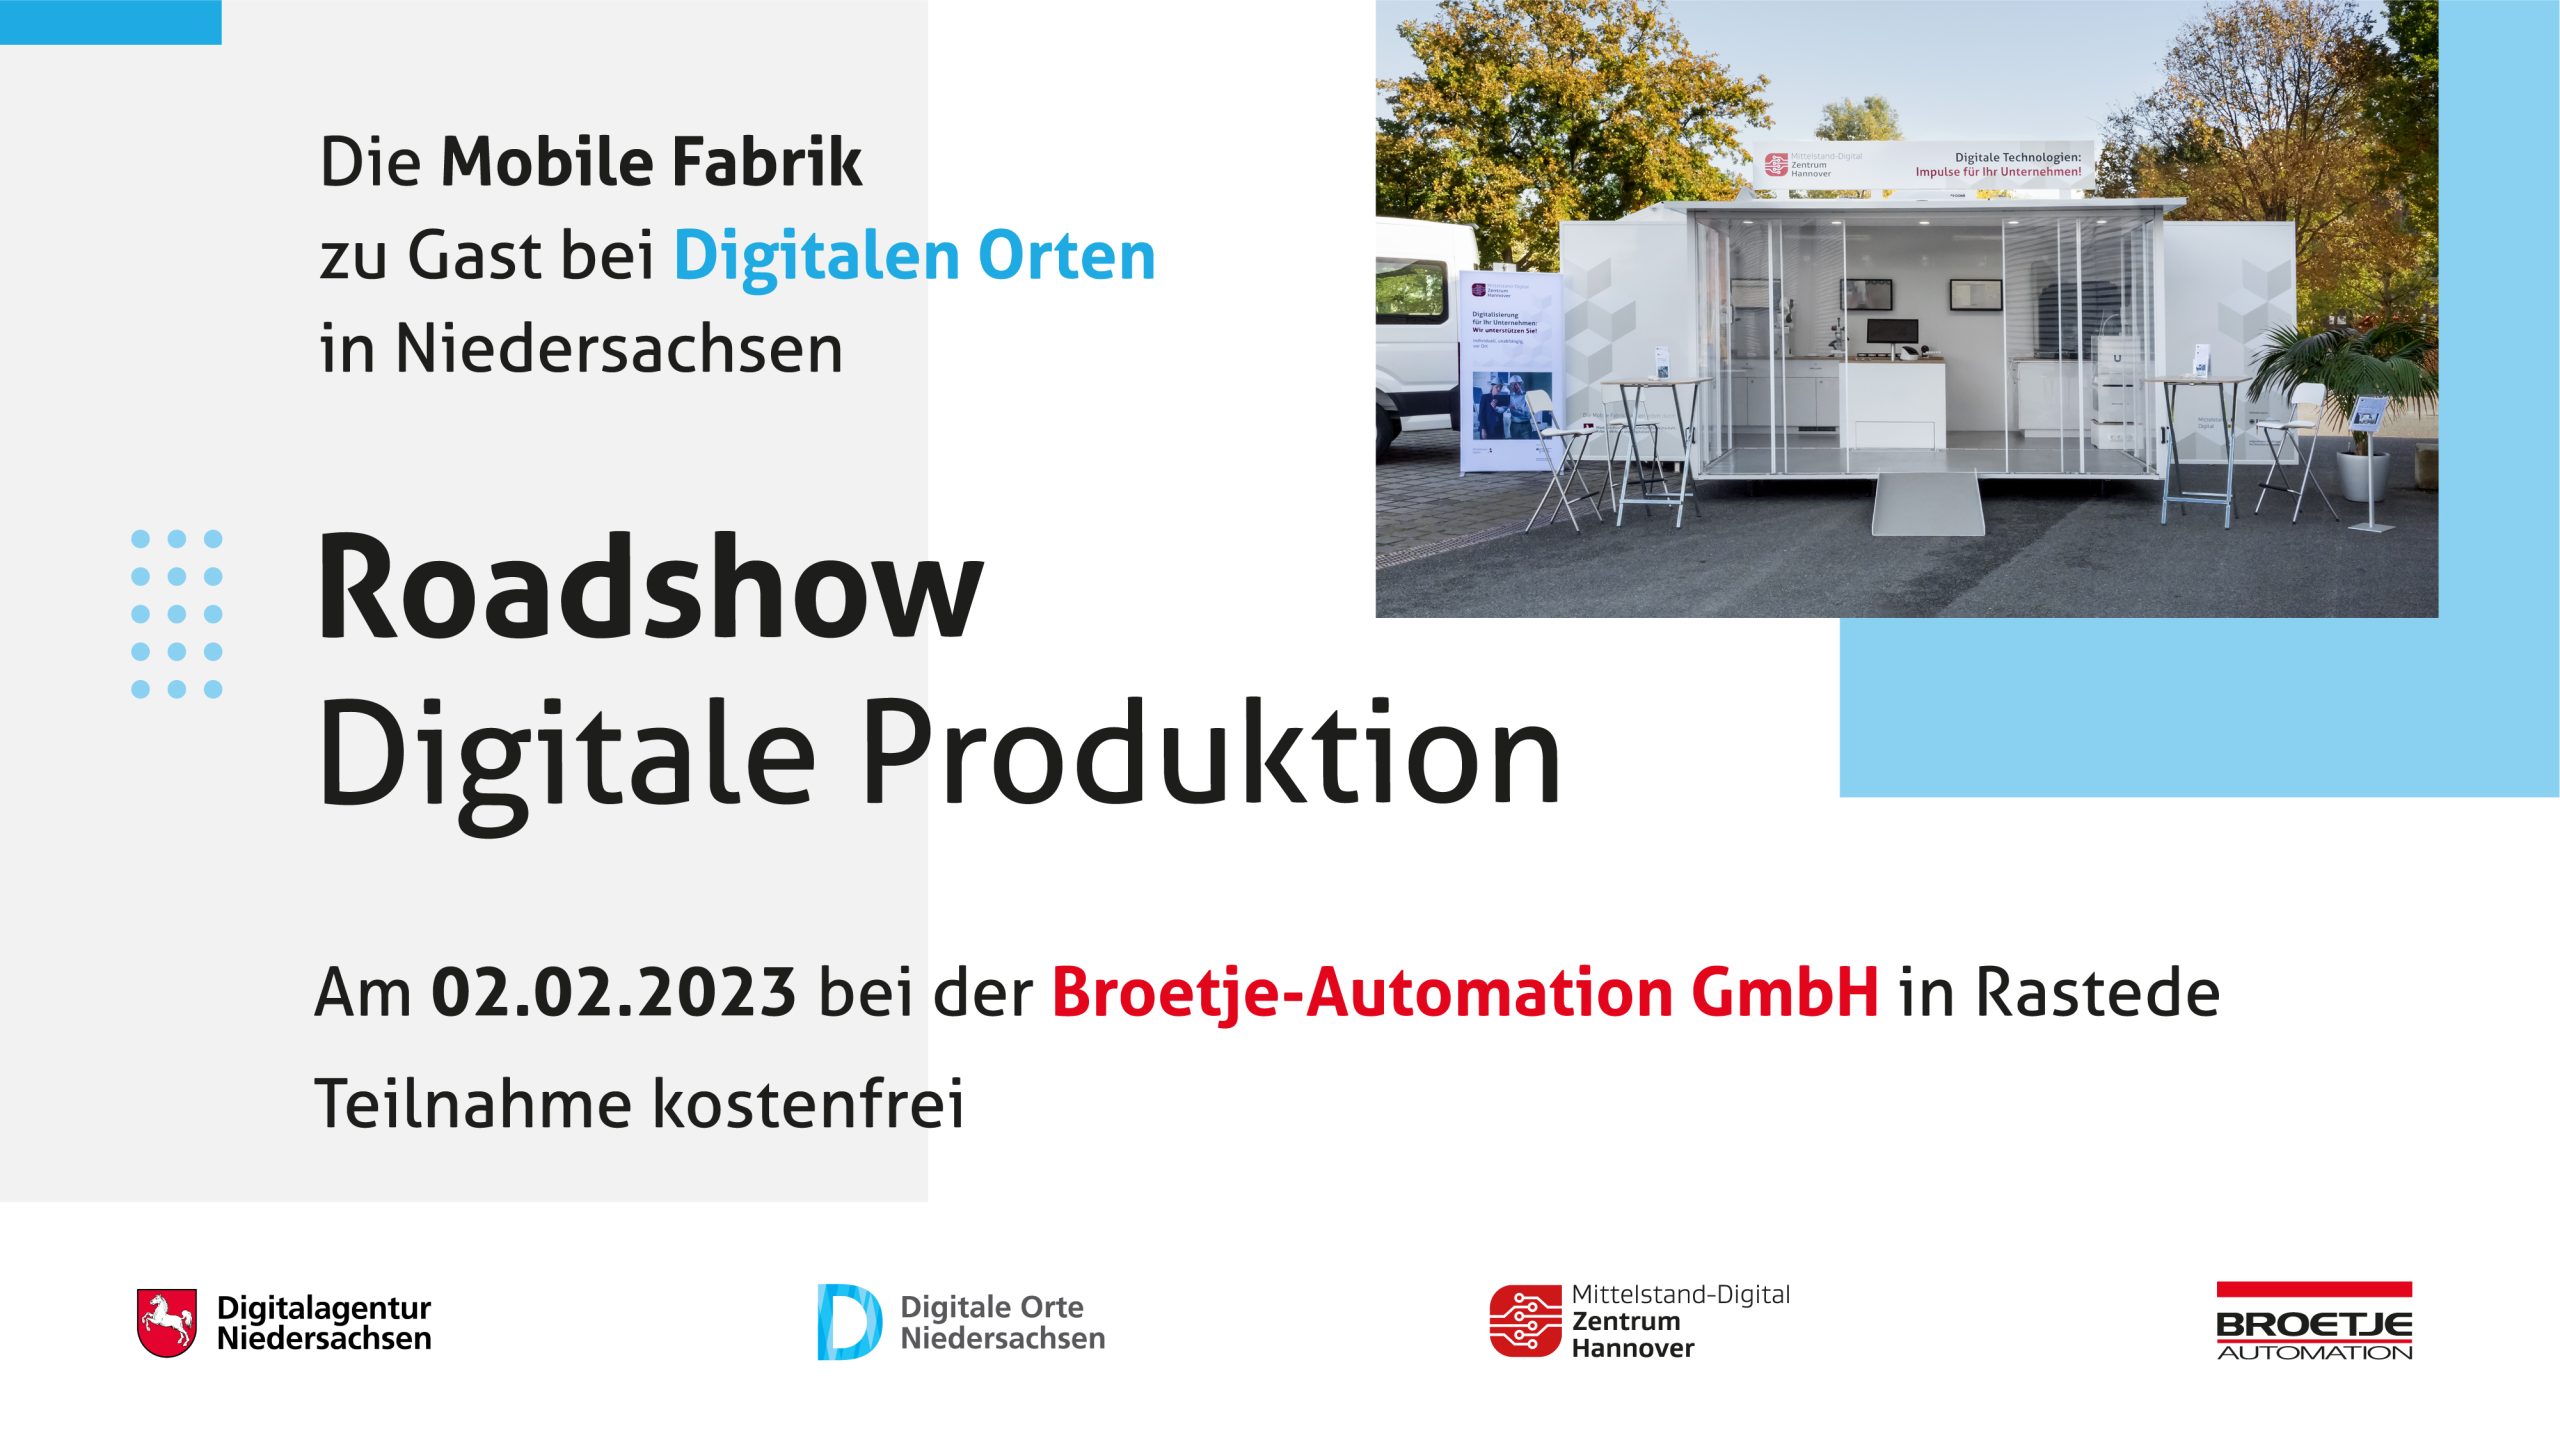 Roadshow „Digitale Produktion” zu Gast bei Broetje-Automation